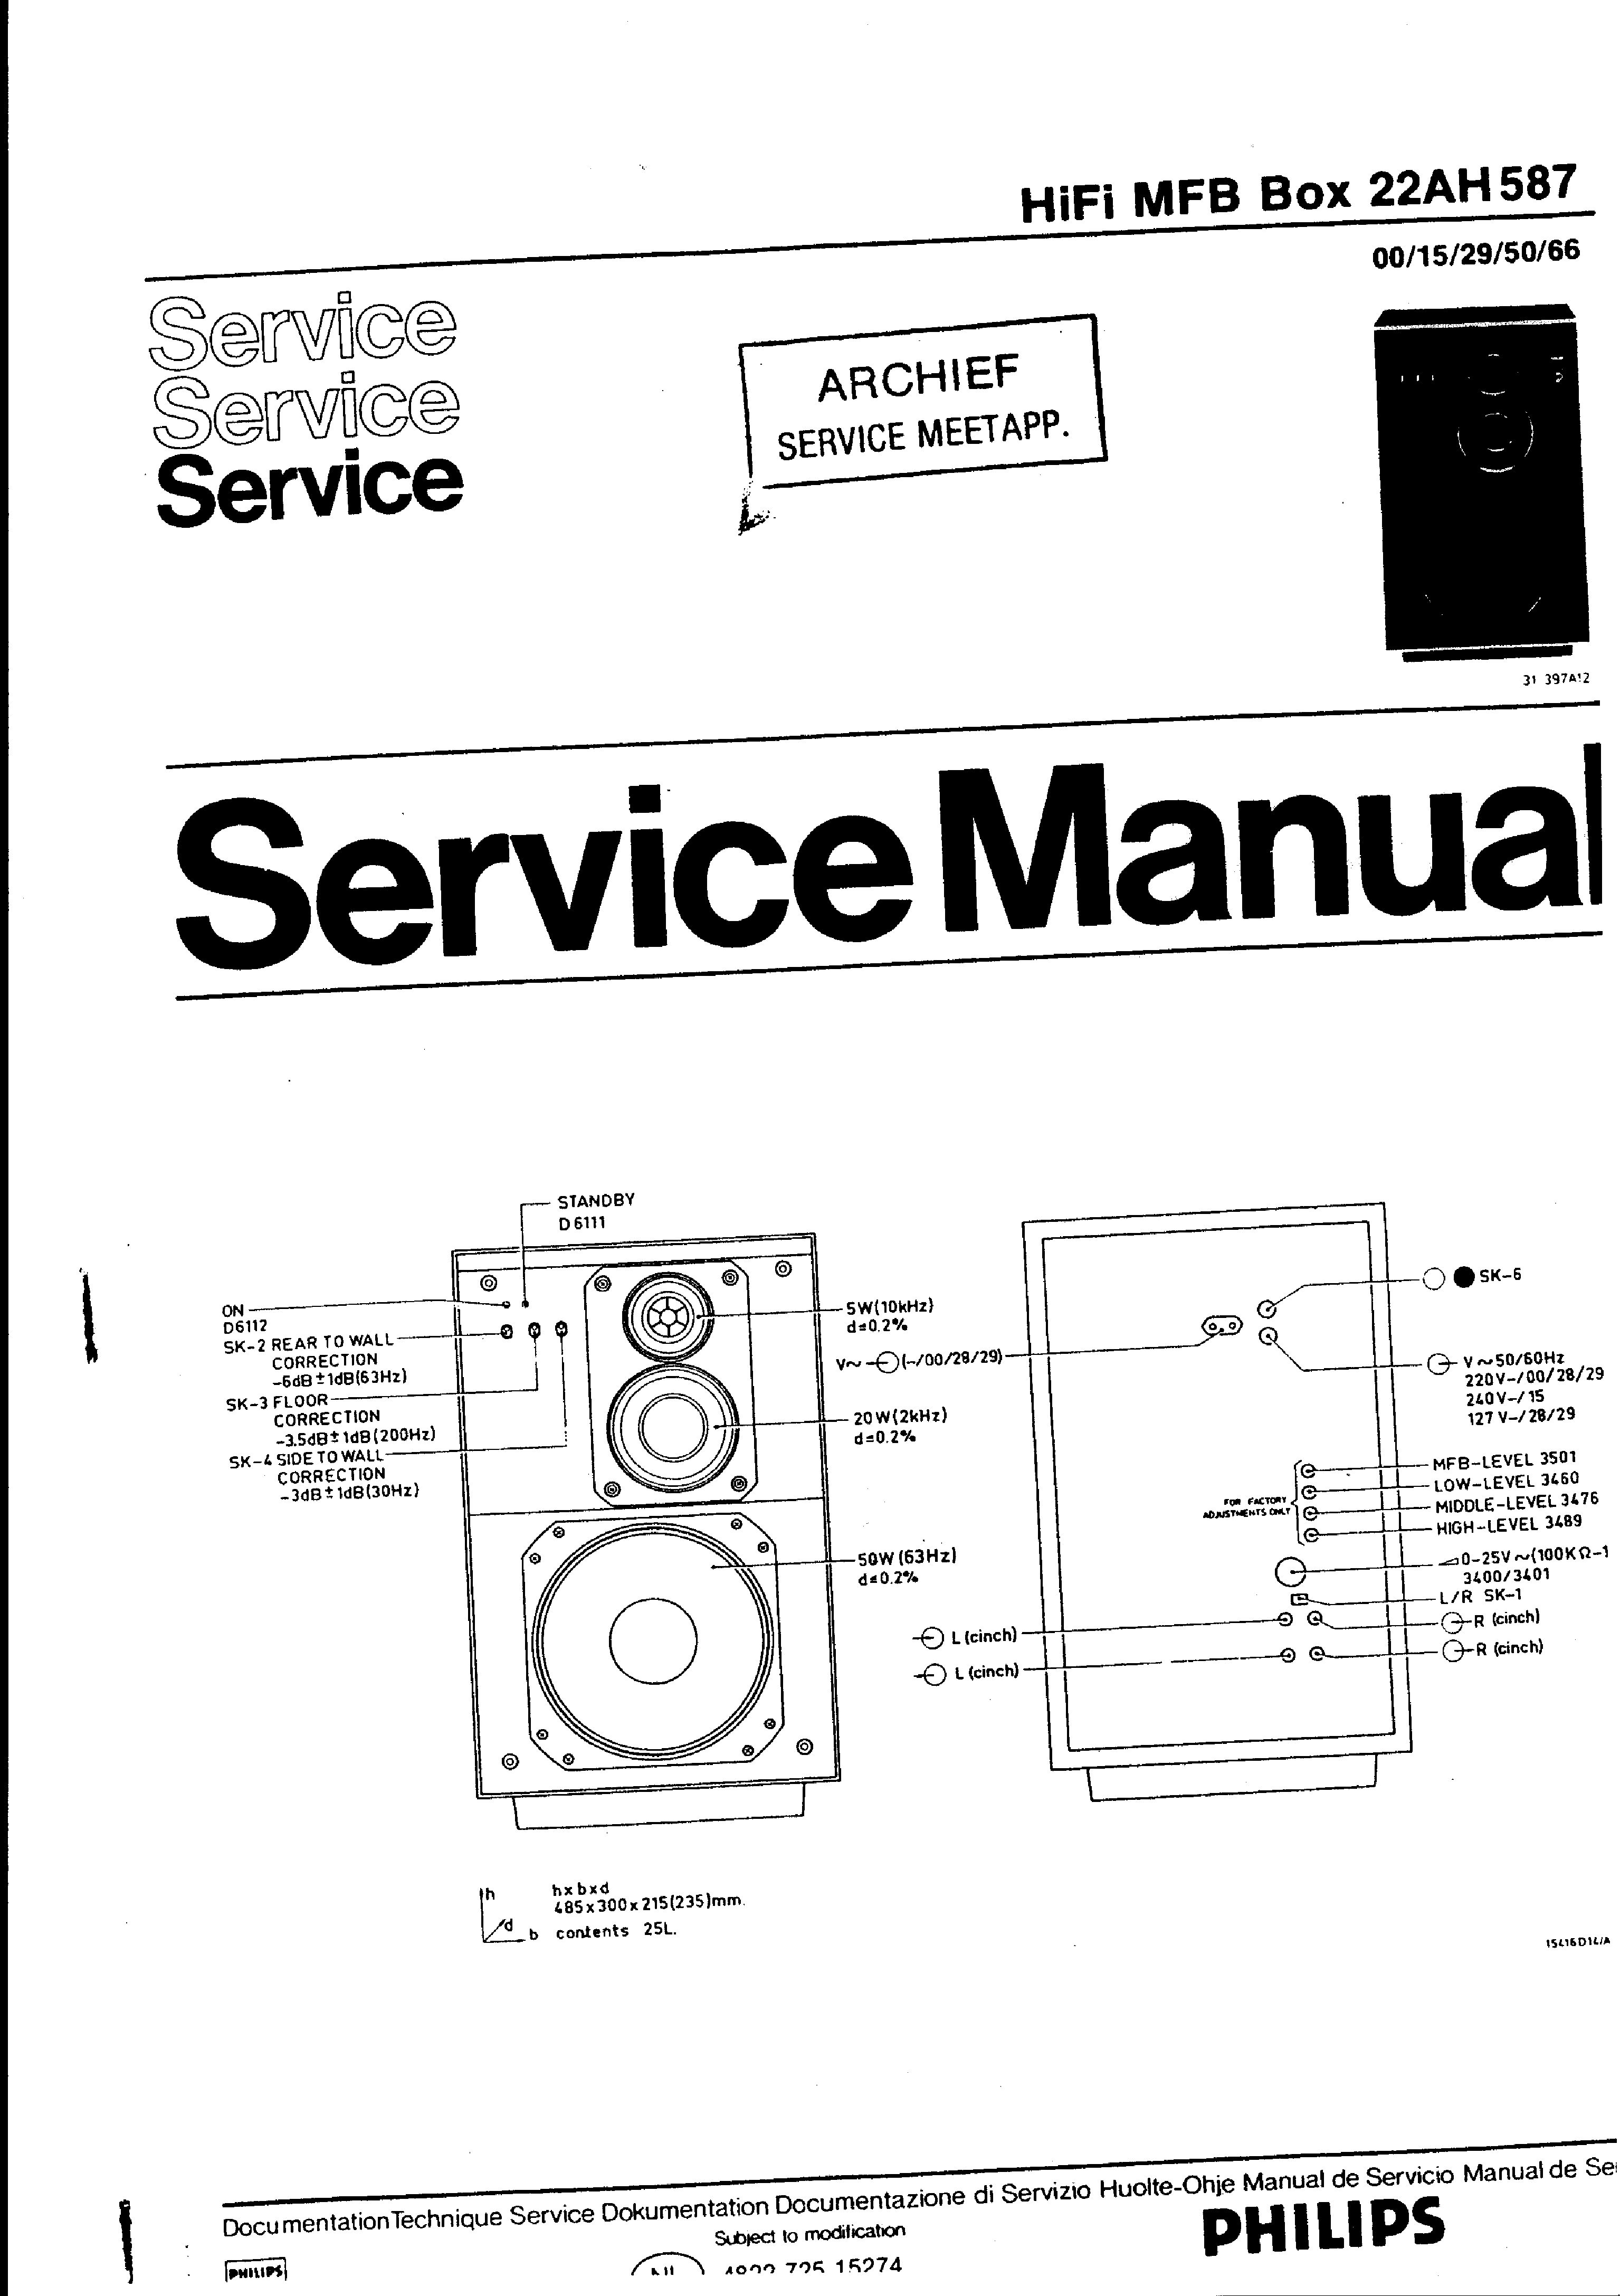 PHILIPS 22AH587 MFB BOX SM service manual (1st page)